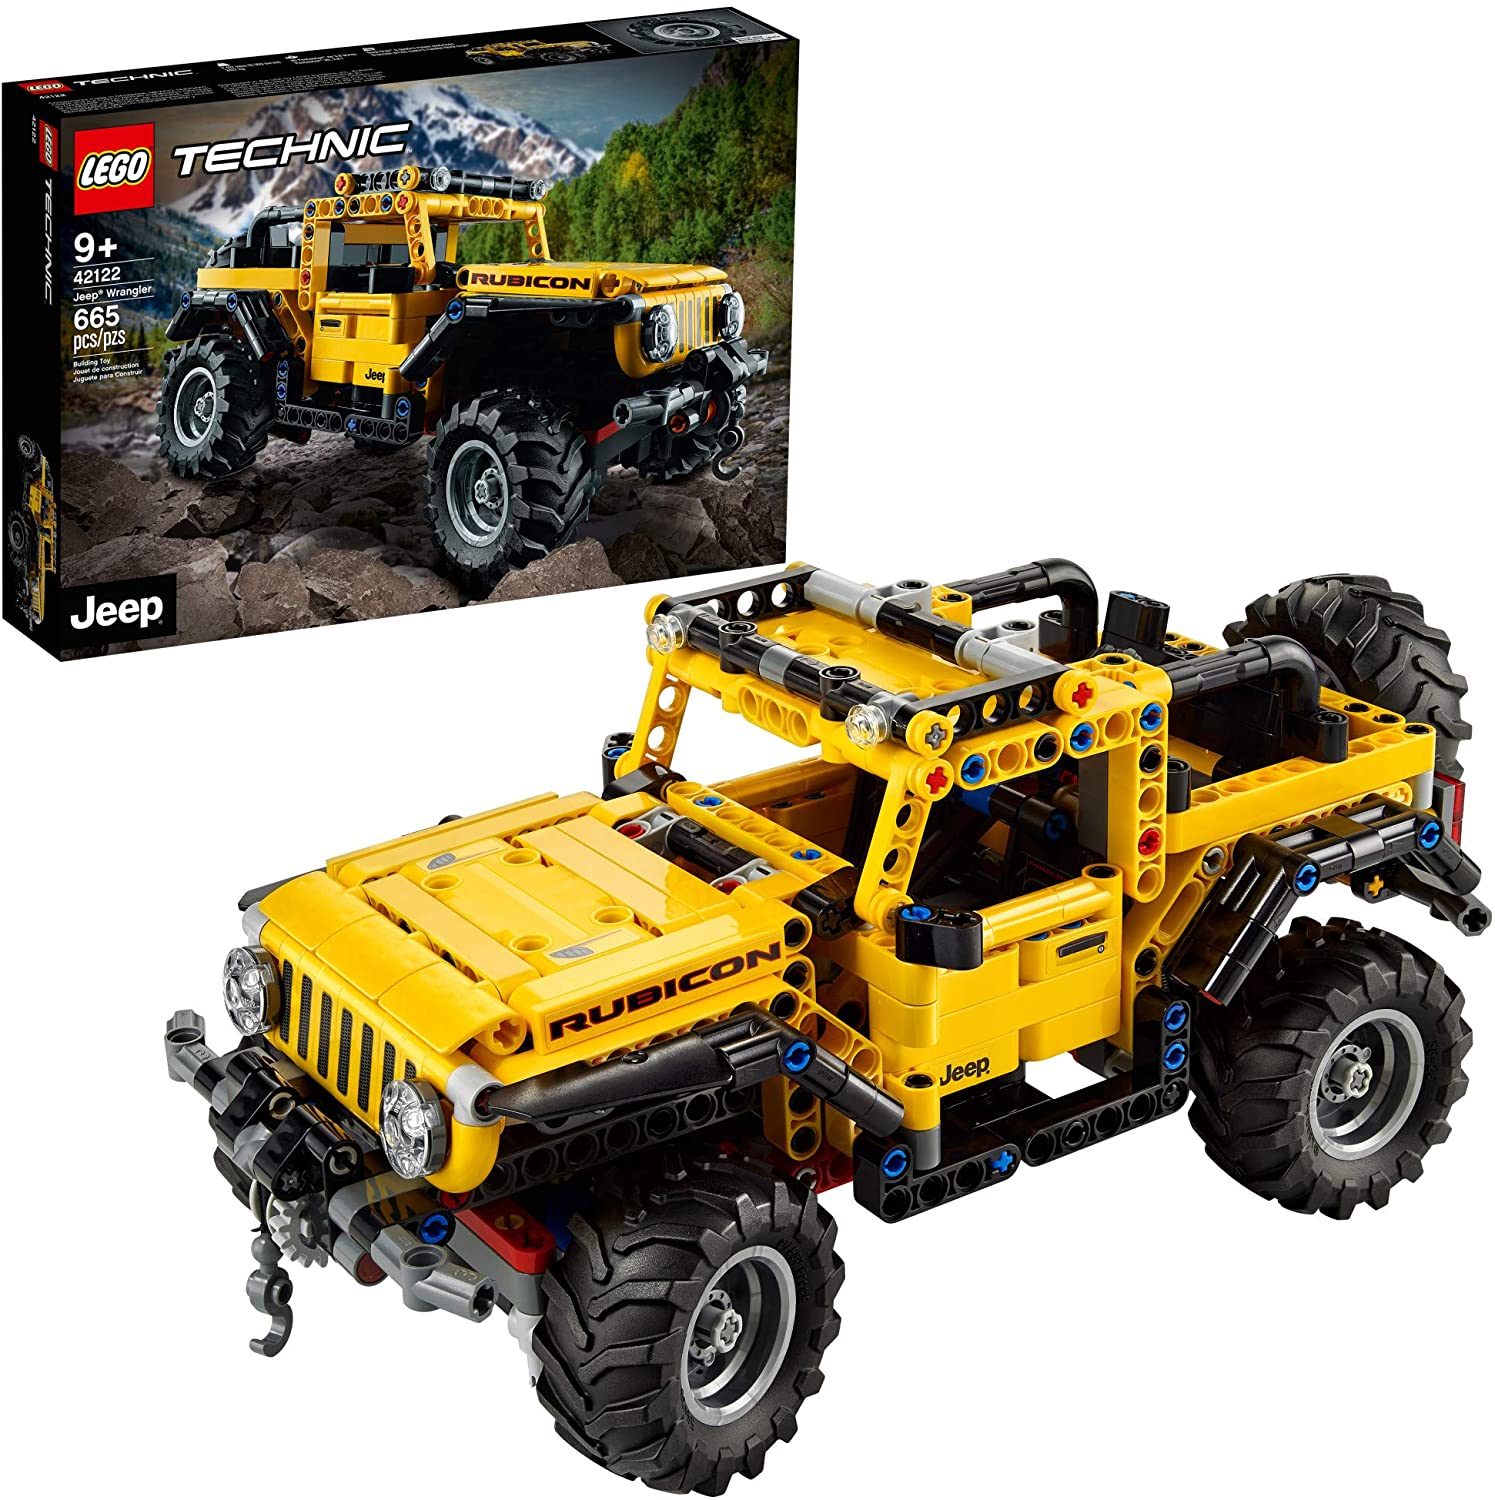 665 Pc. LEGO Technic Jeep Wrangler Building Kit (42122) $37.99 + Free Ship w/Prime or on orders $35+